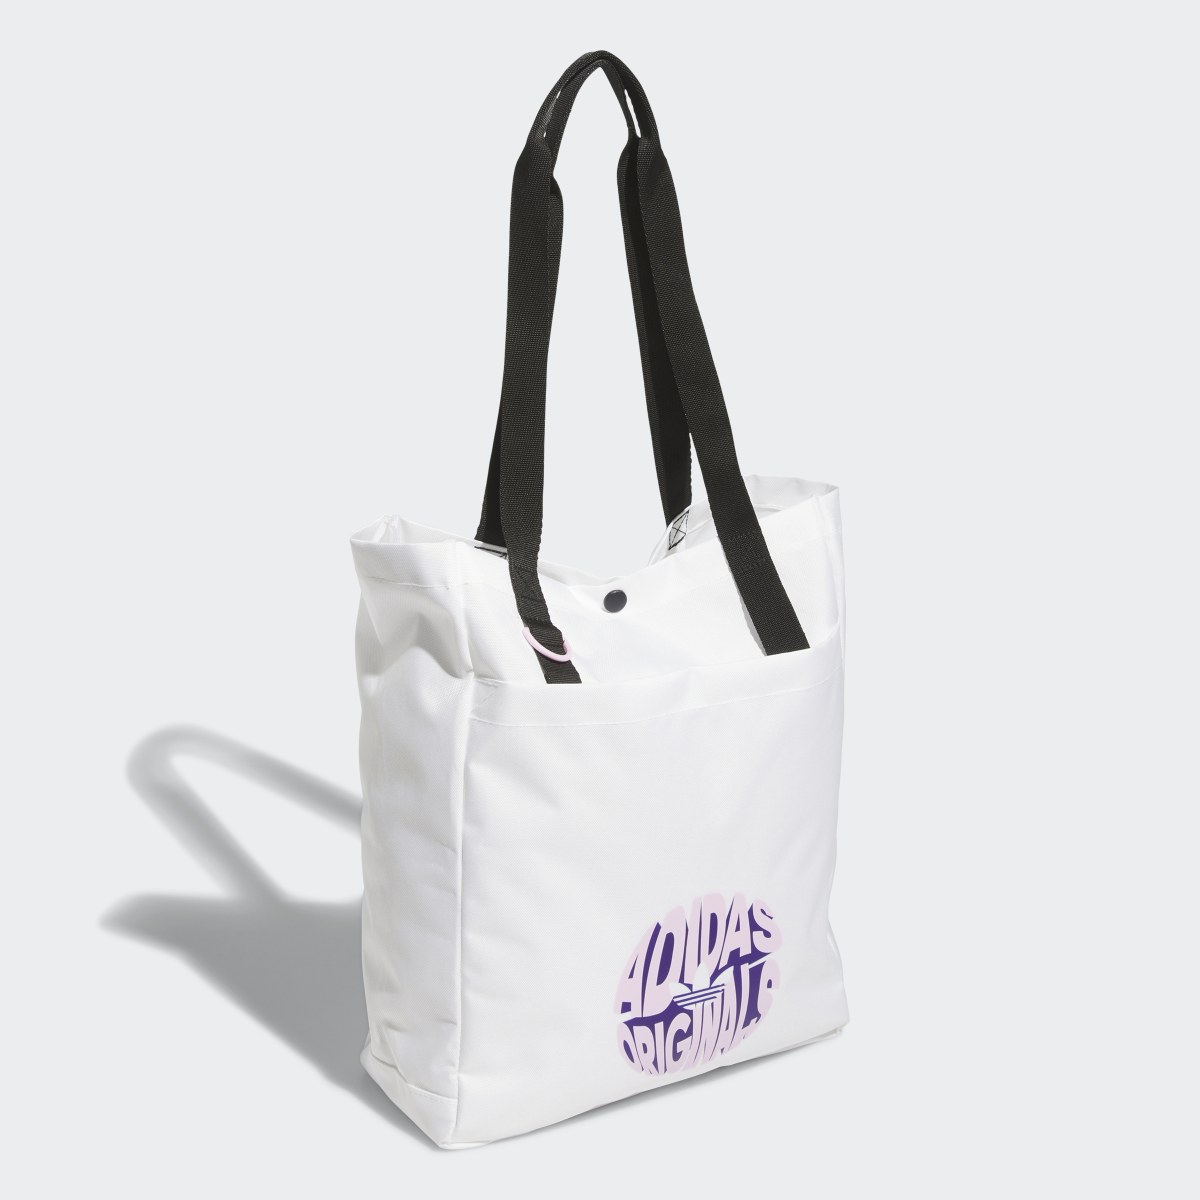 Adidas Simple Tote Bag. 4